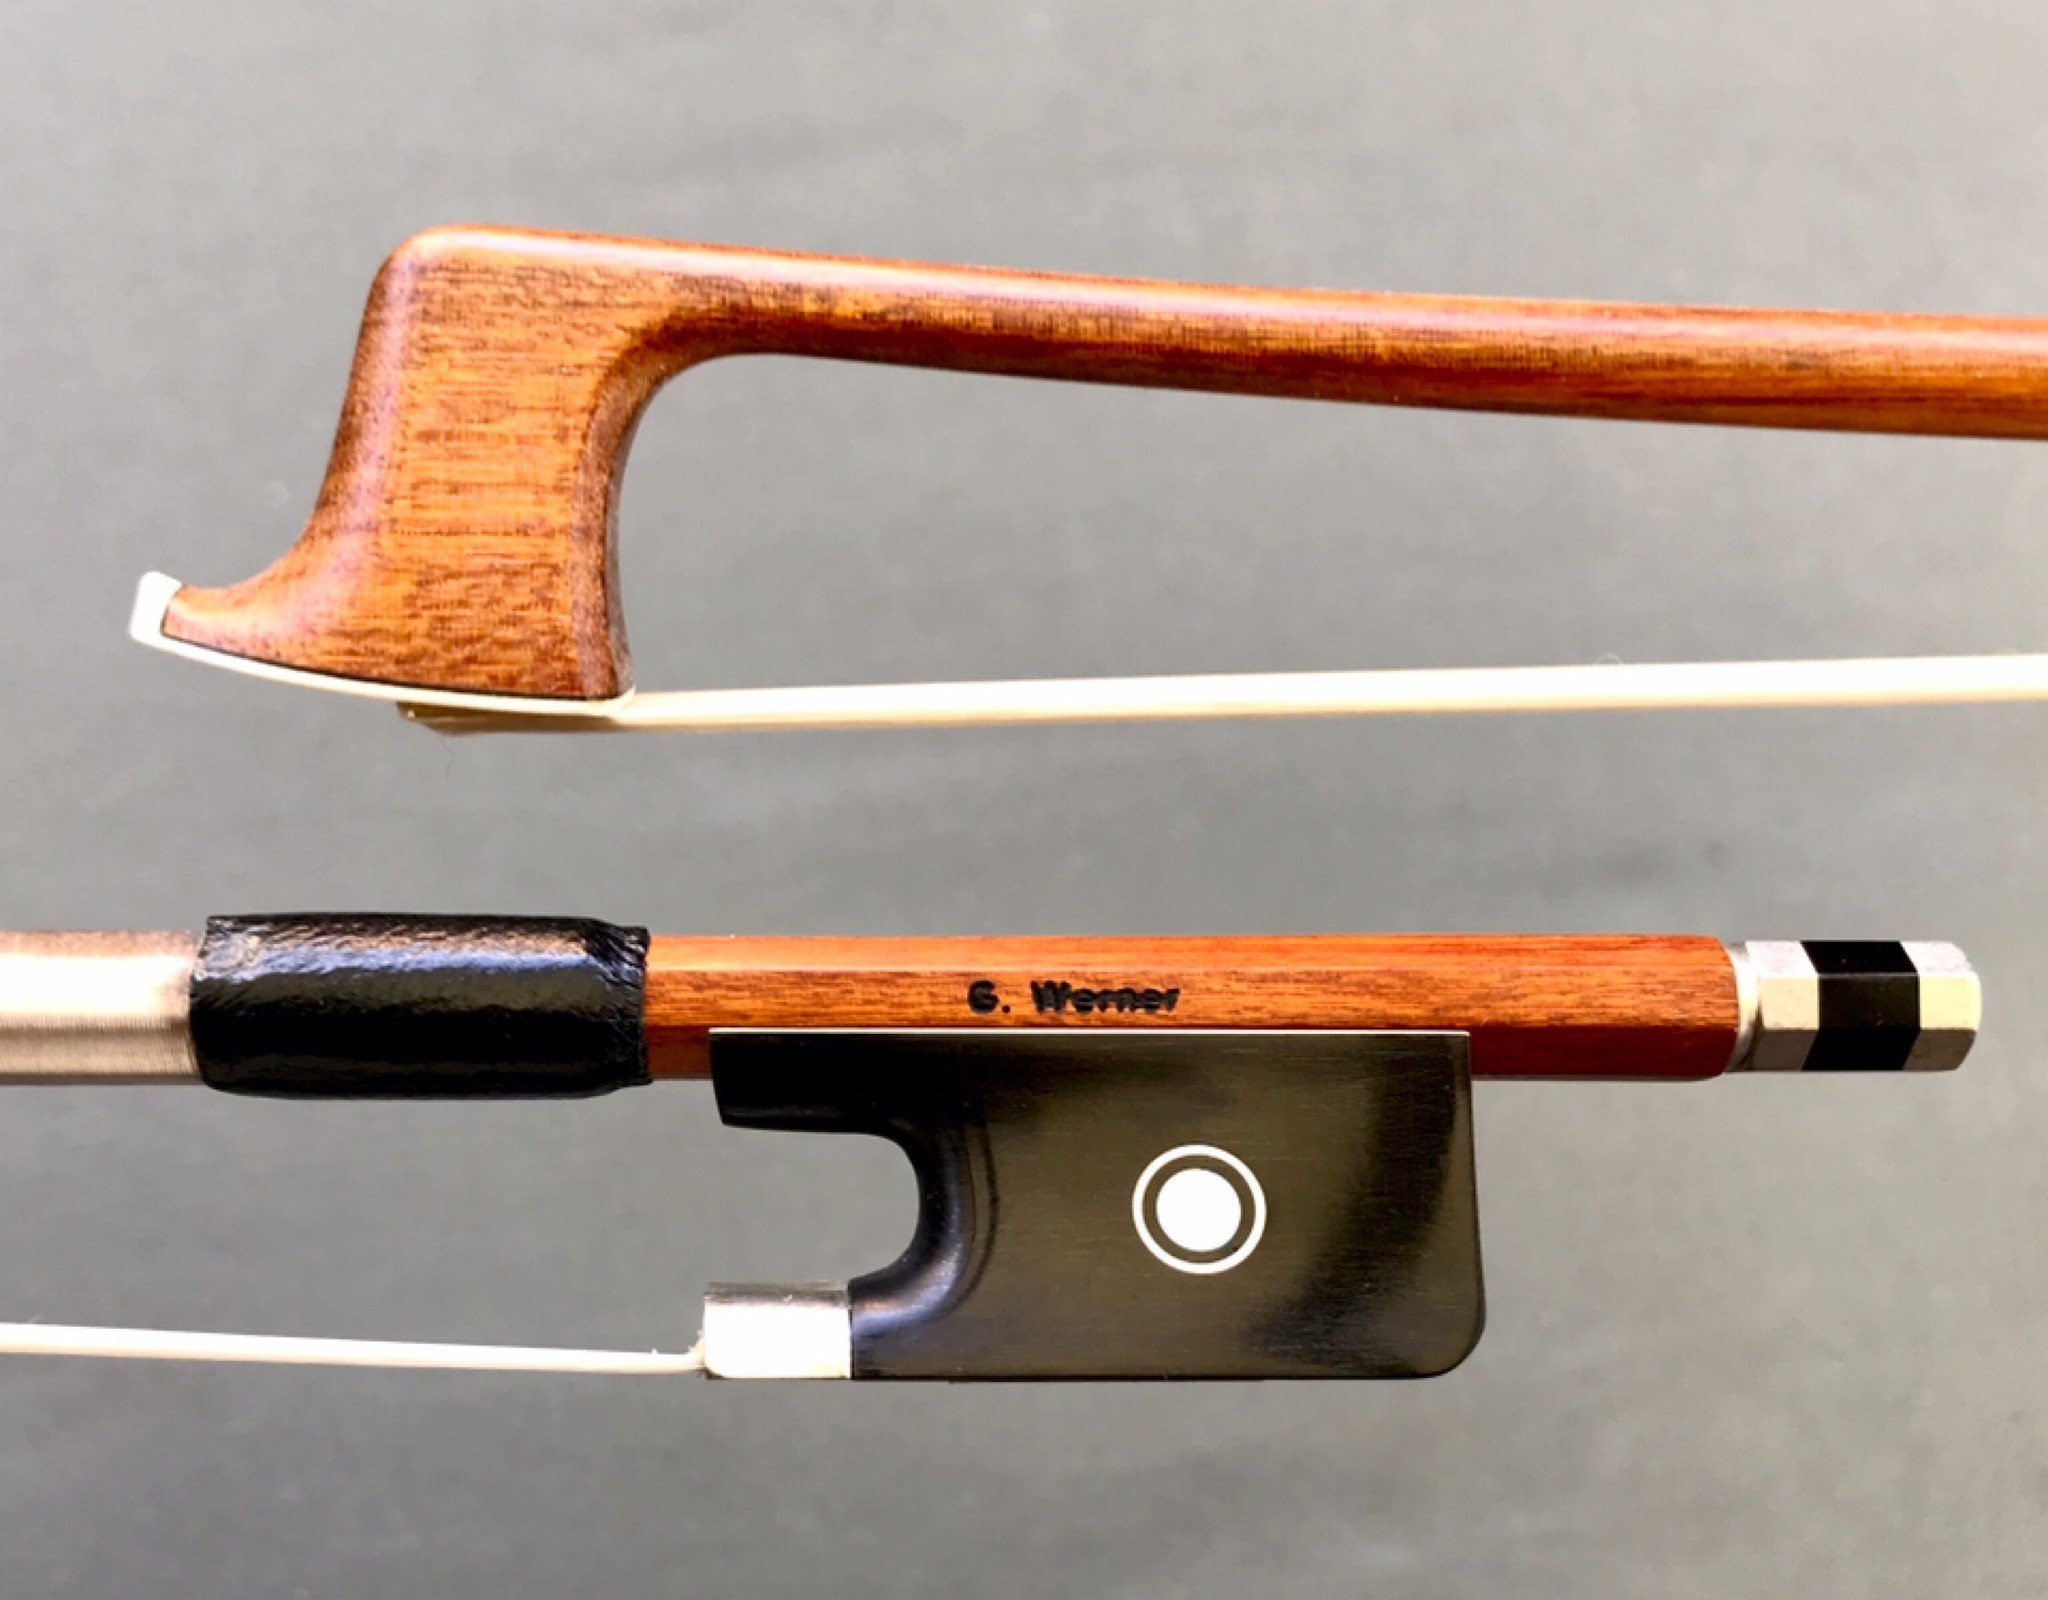 Werner G. WERNER 4/4 Pernambuco viola bow, nickel mounted ebony frog, round stick